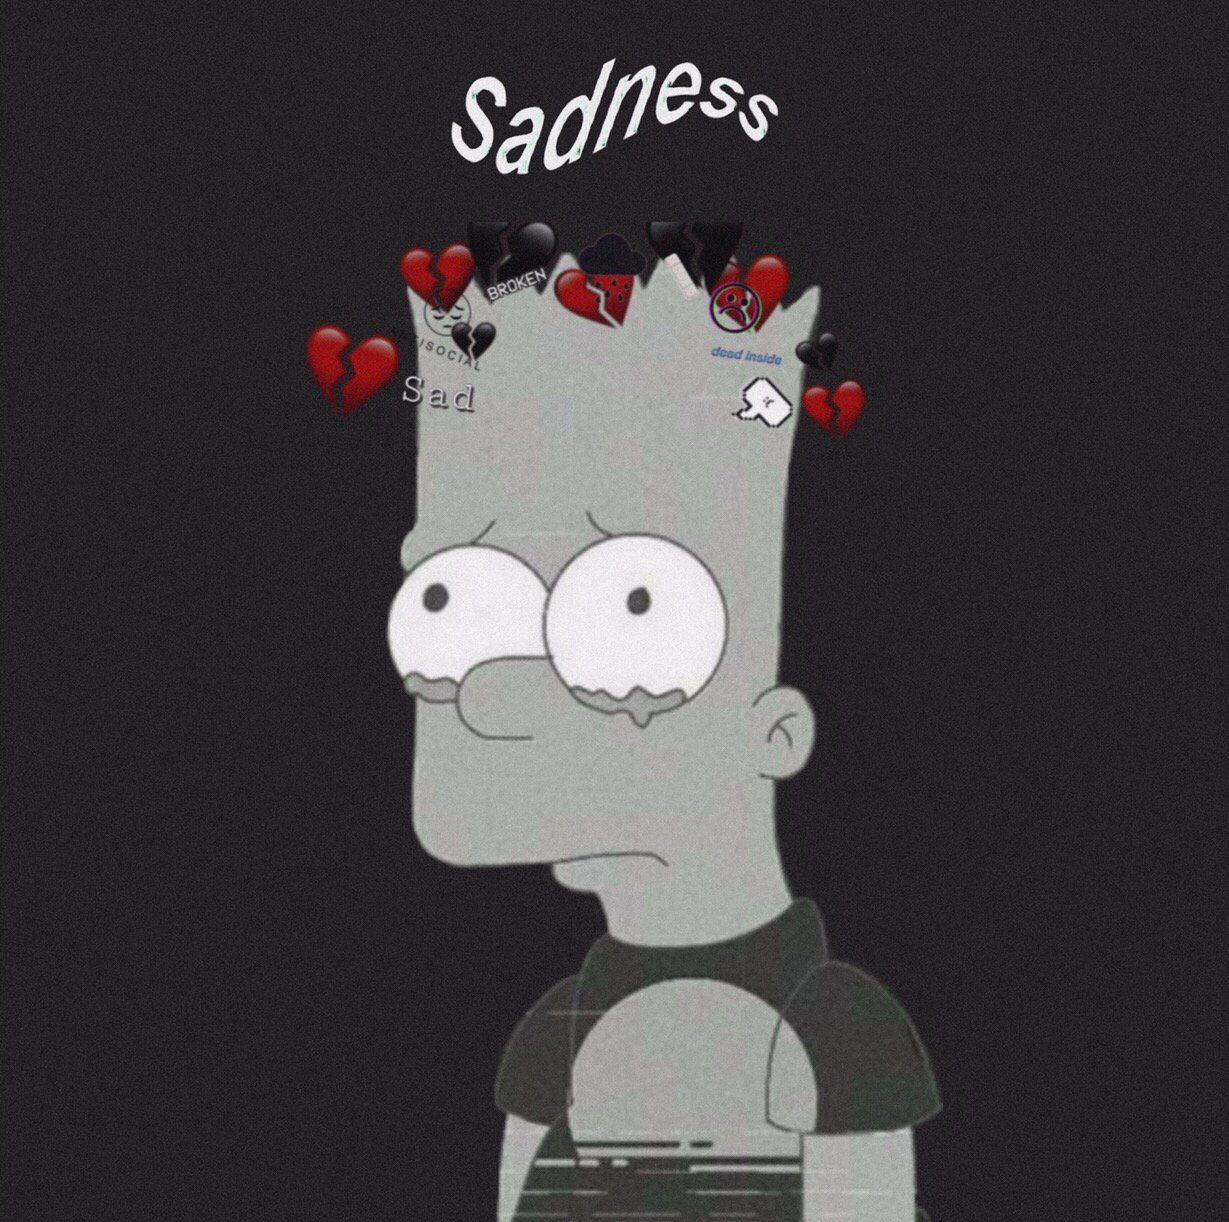 Simpsons sad Wallpapers Download